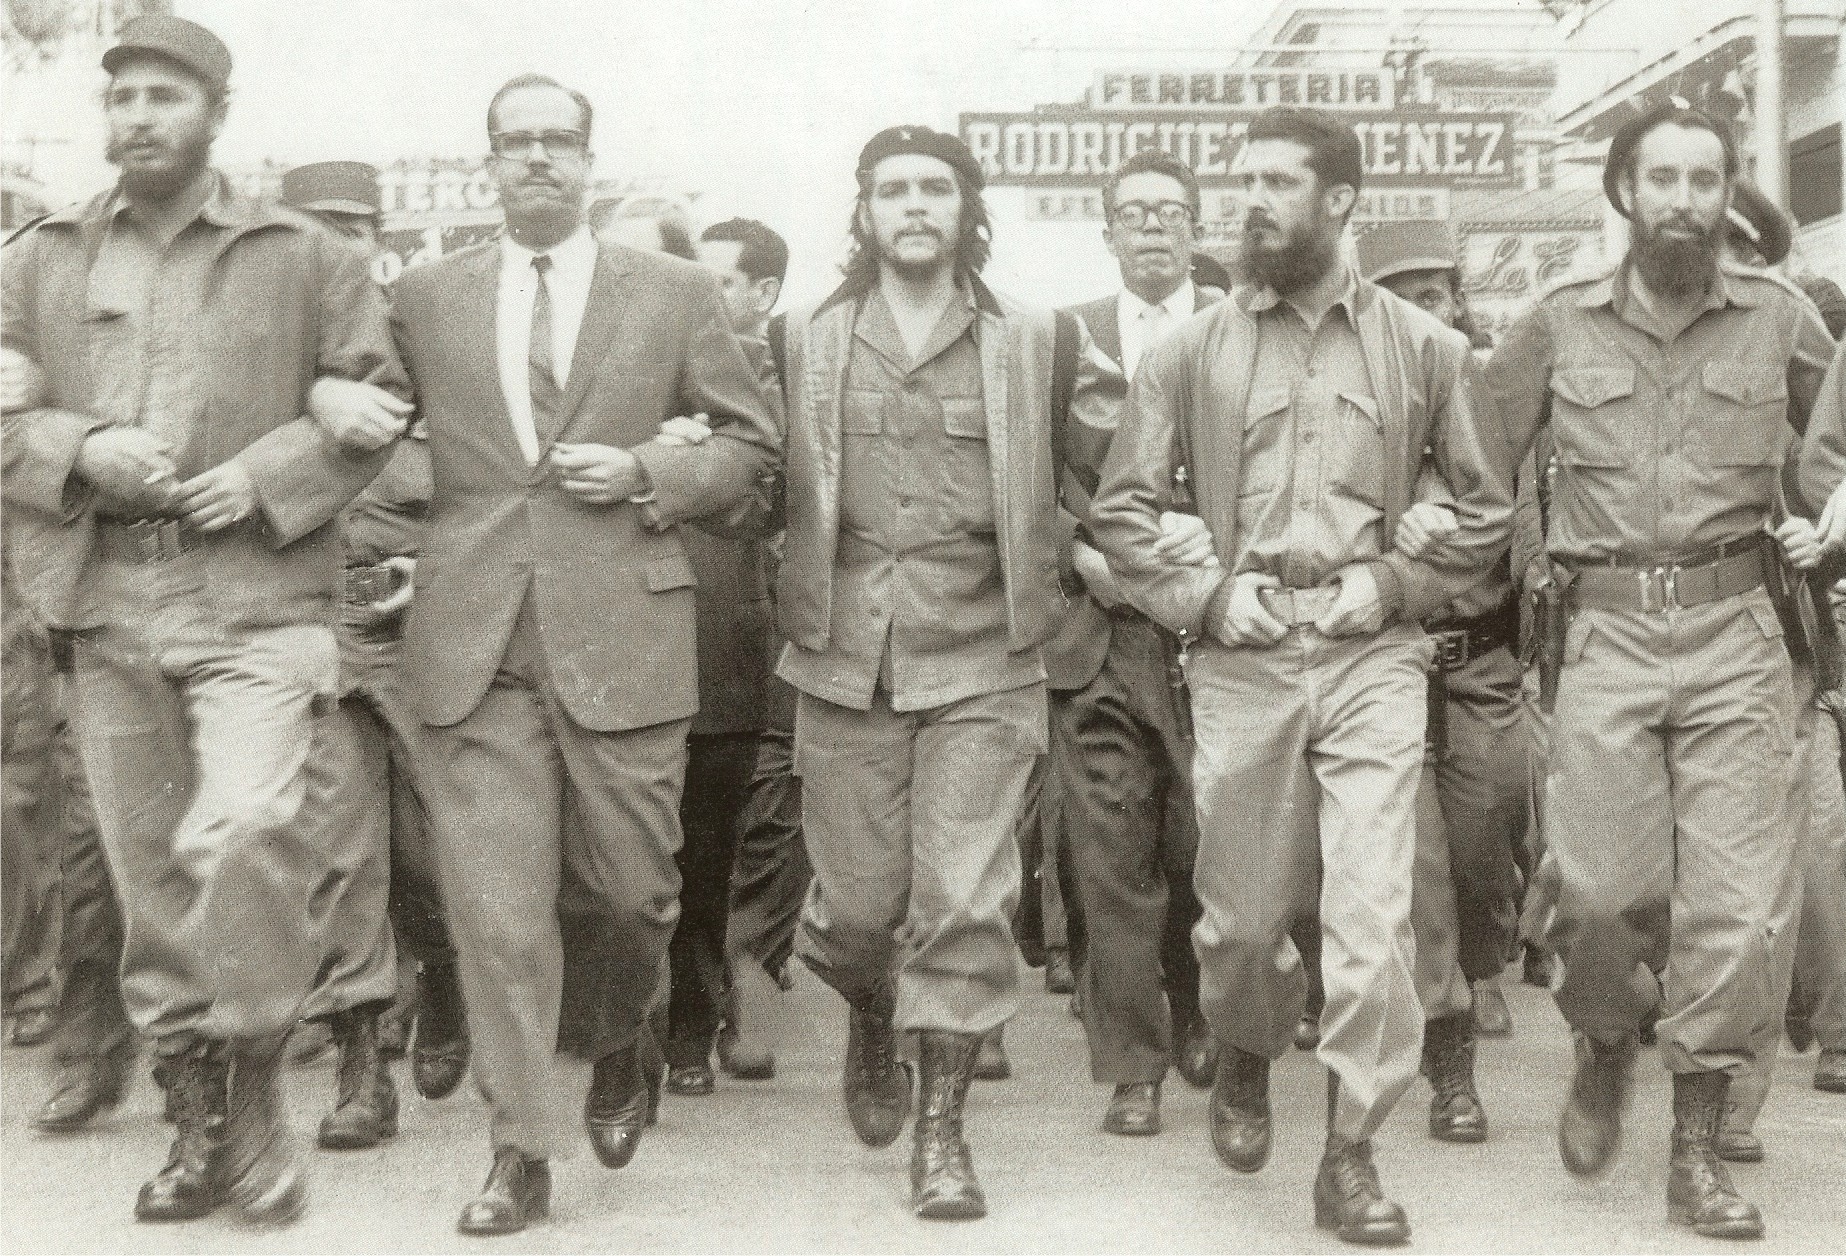 Fidel Castro And JFK Assassination